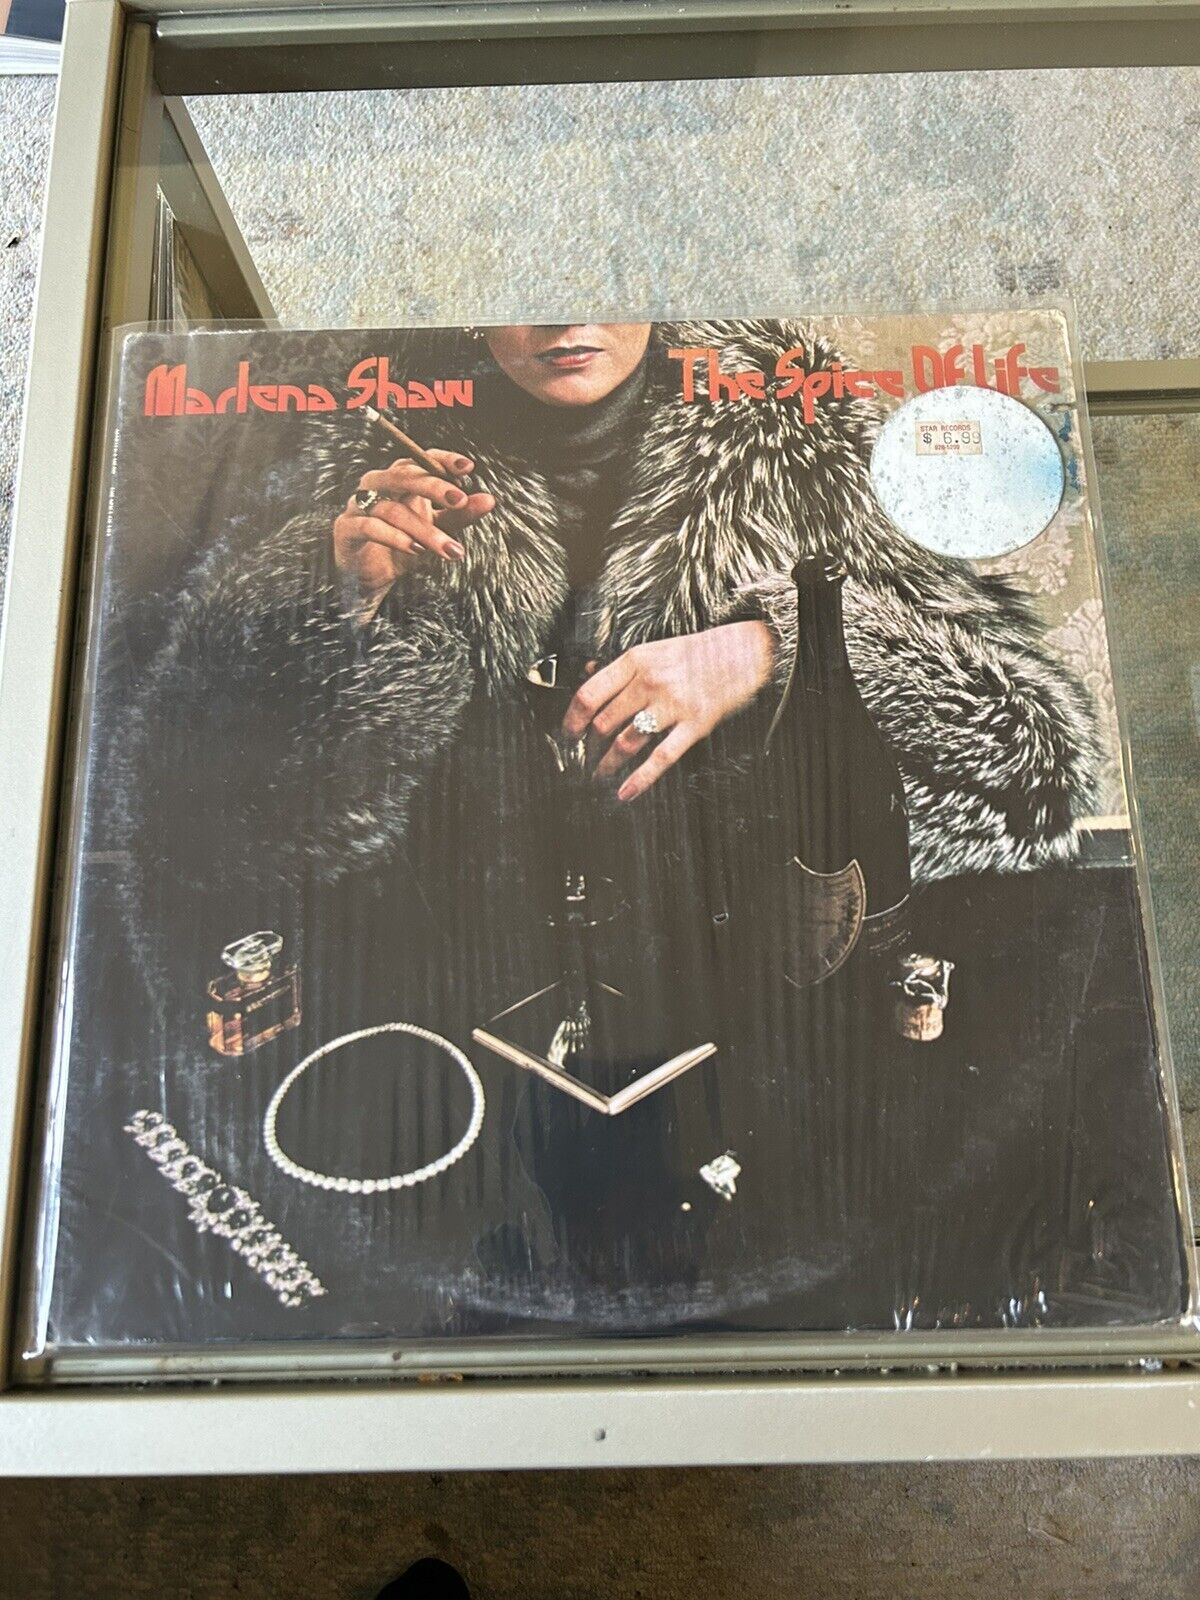 MARLENA SHAW The Spice of Life 1977 Cadet Records CA-833 In Shrink Rare EX/EX